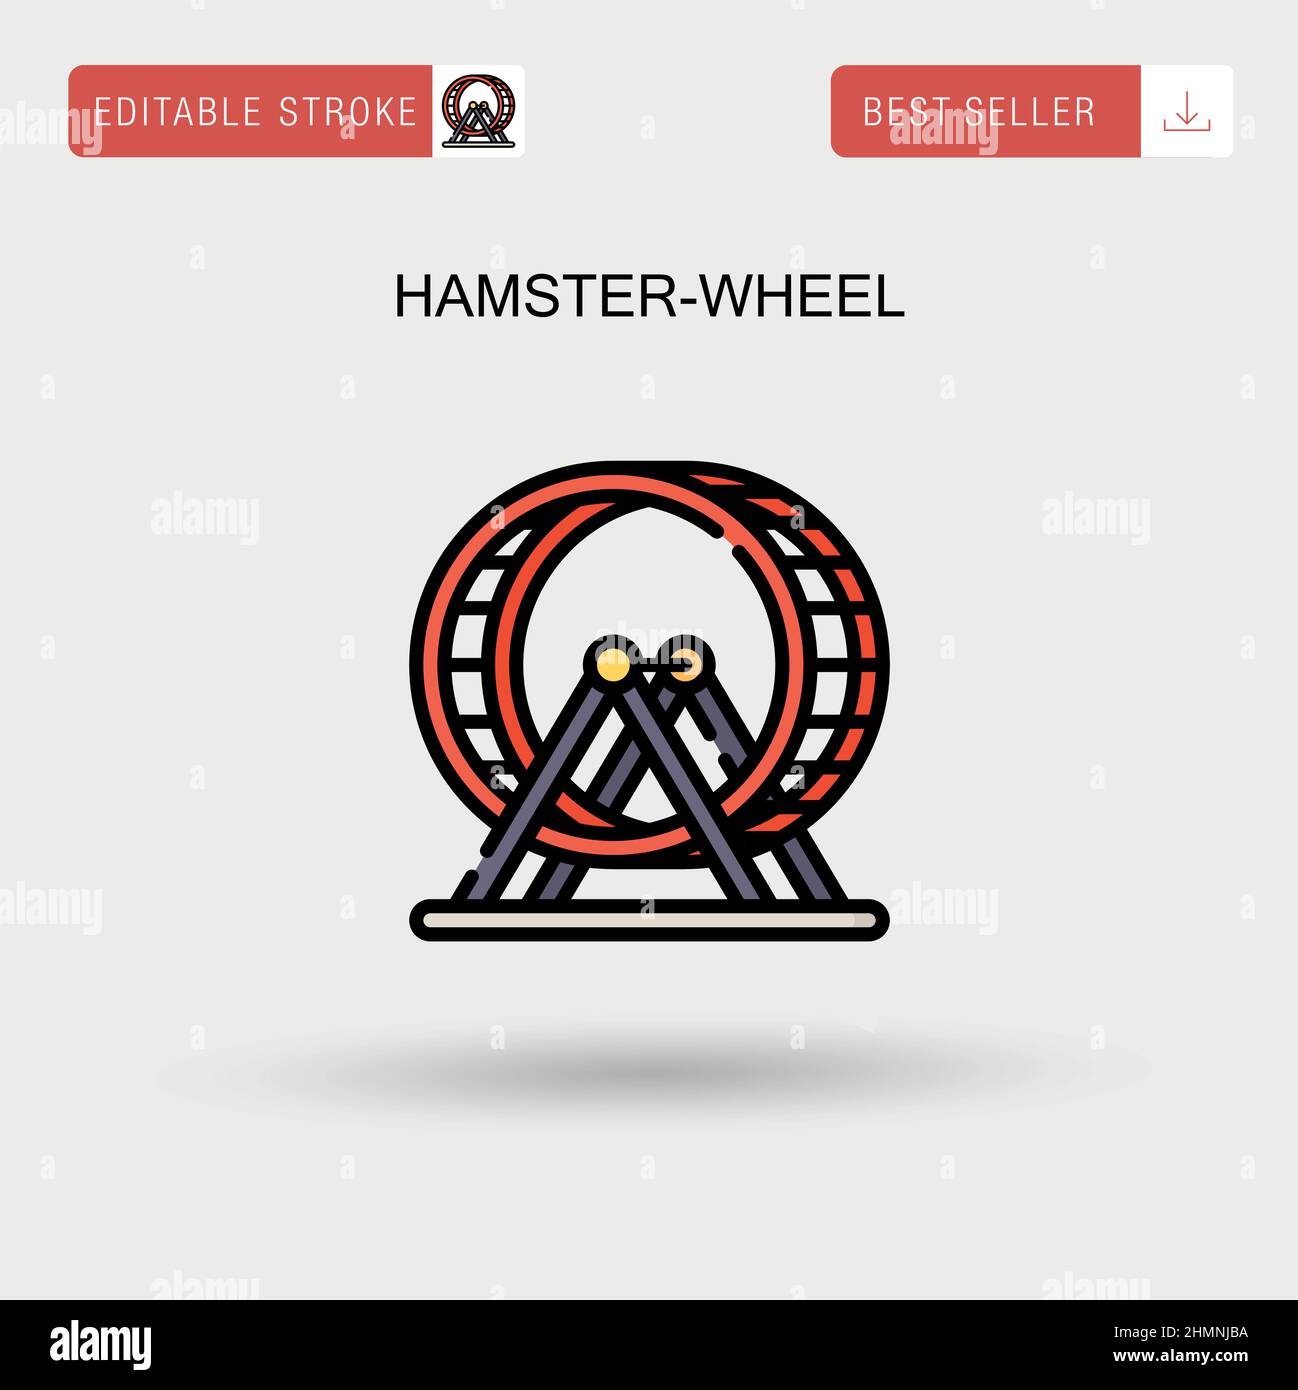 Einfaches Vektorsymbol für Hamsterrad. Stock Vektor